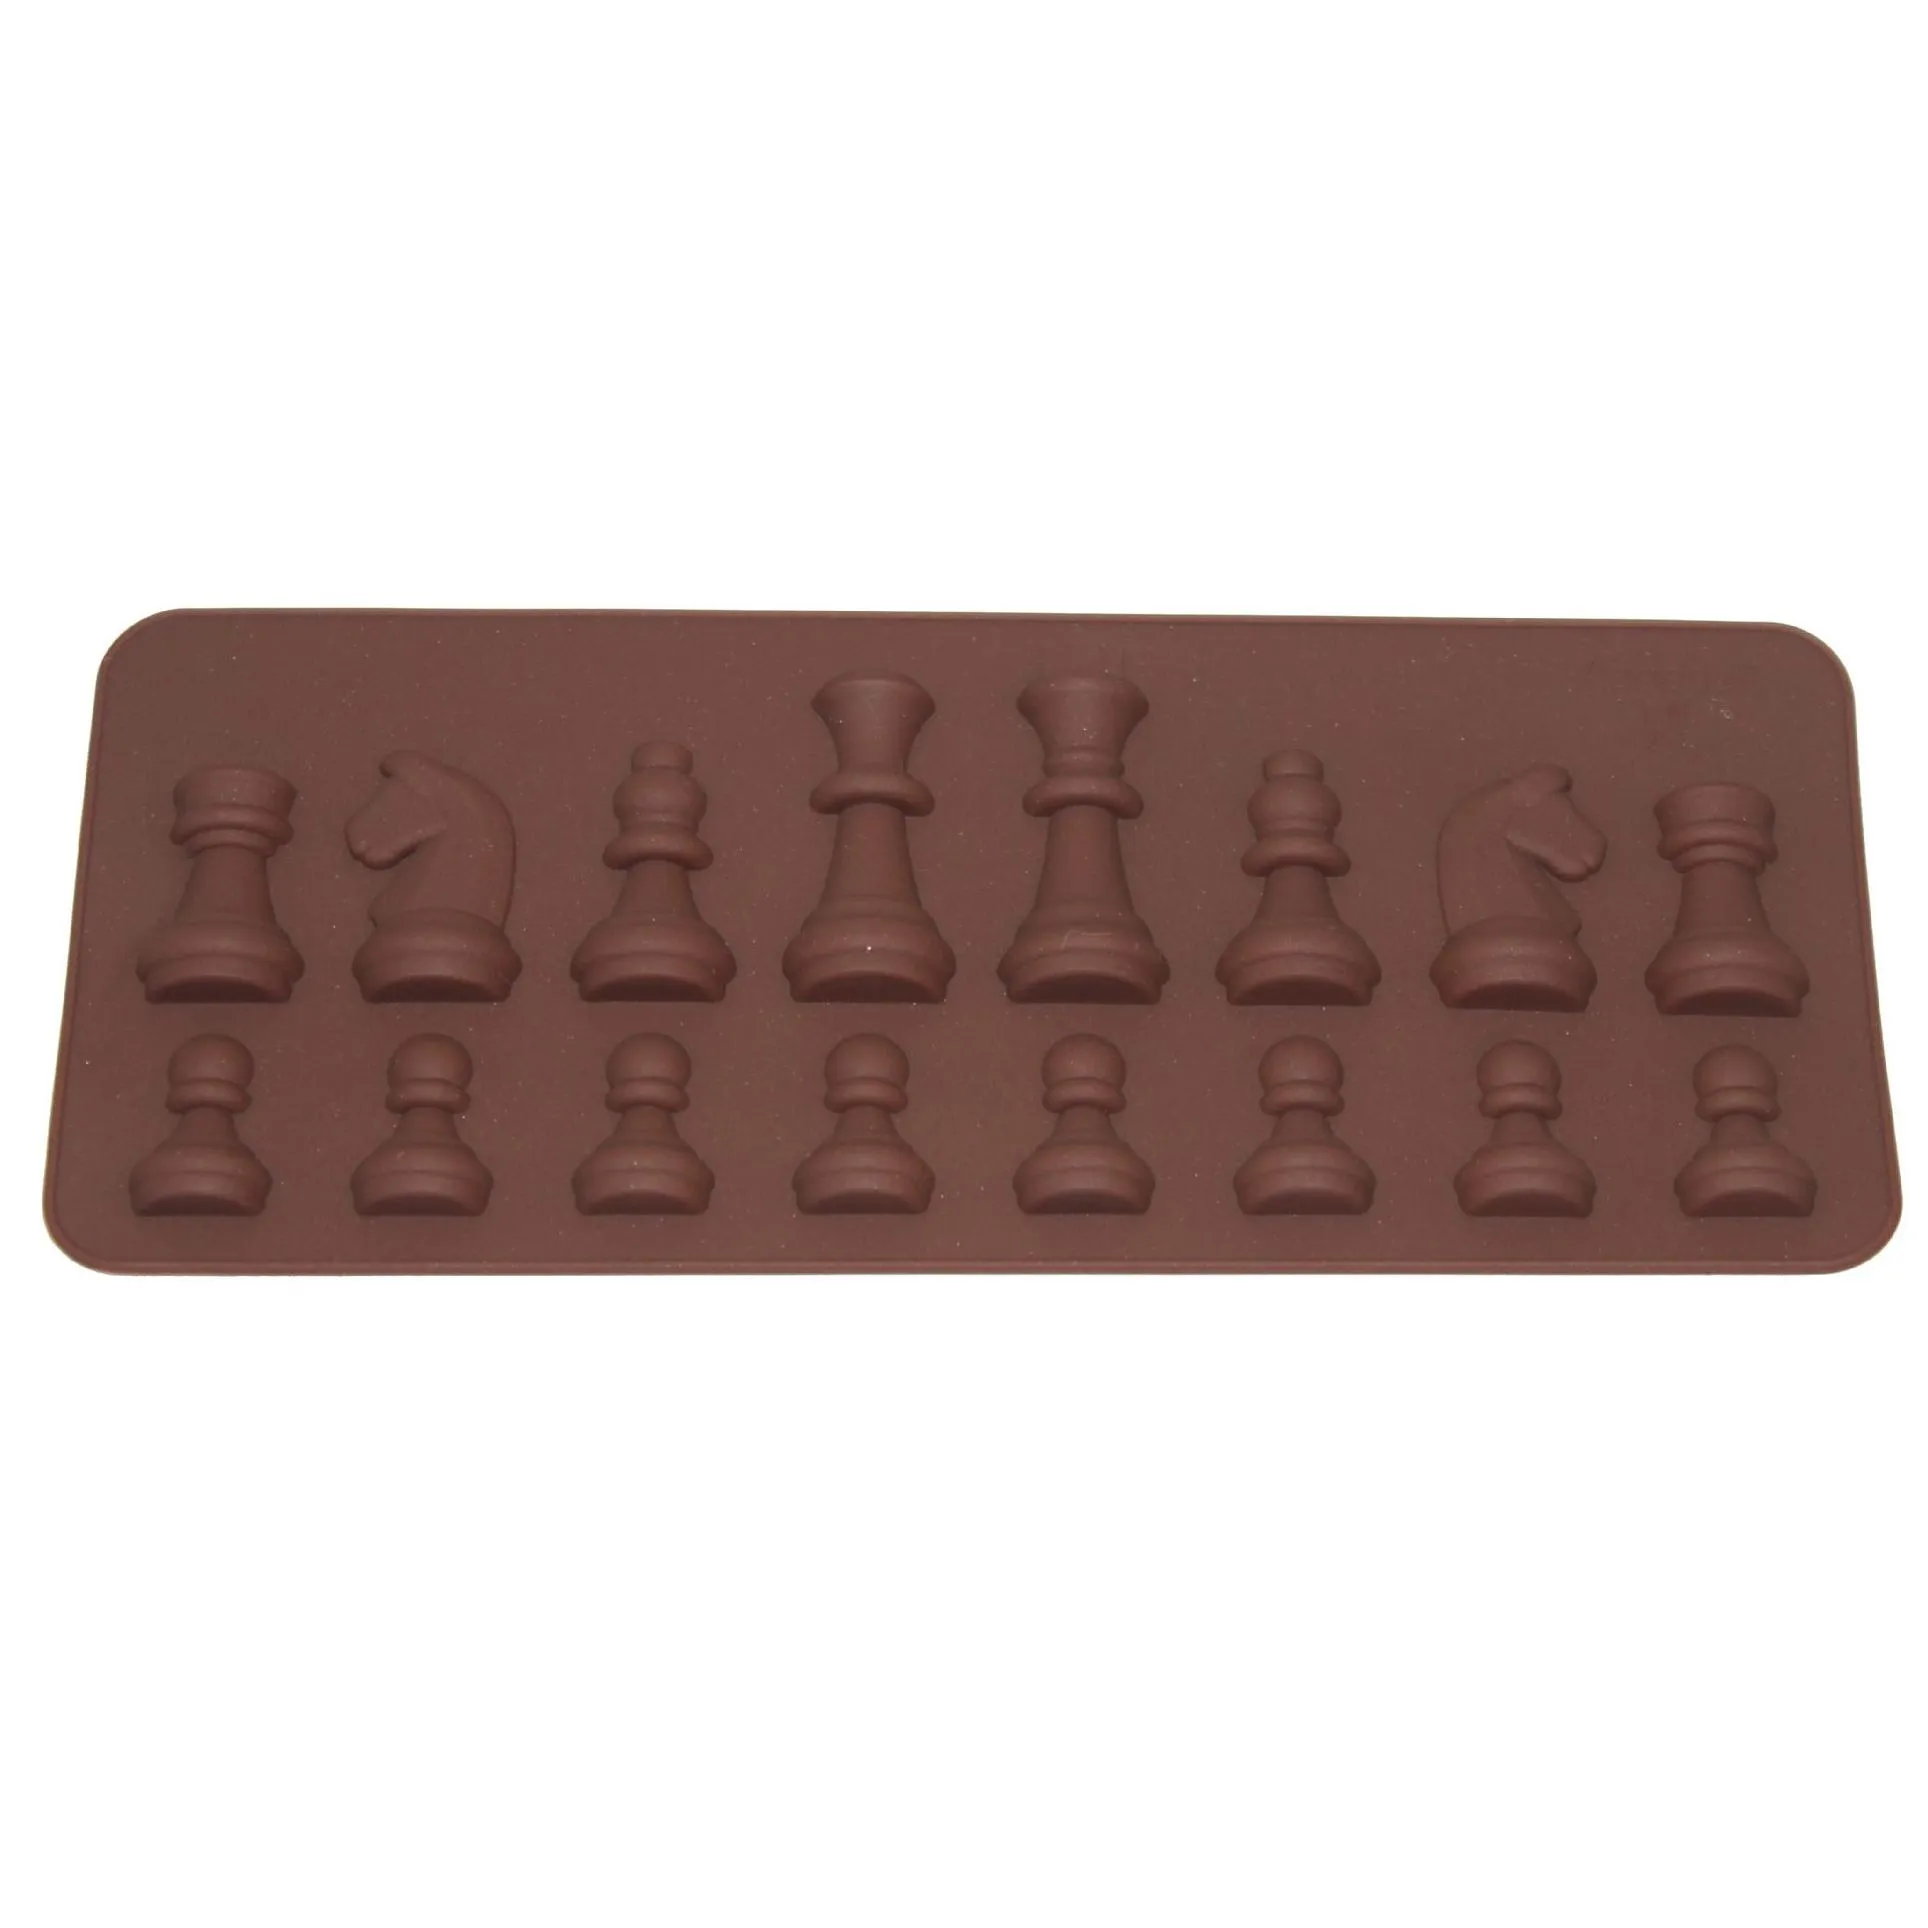  international chess silicone mould fondant cake chocolate molds for kitchen baking